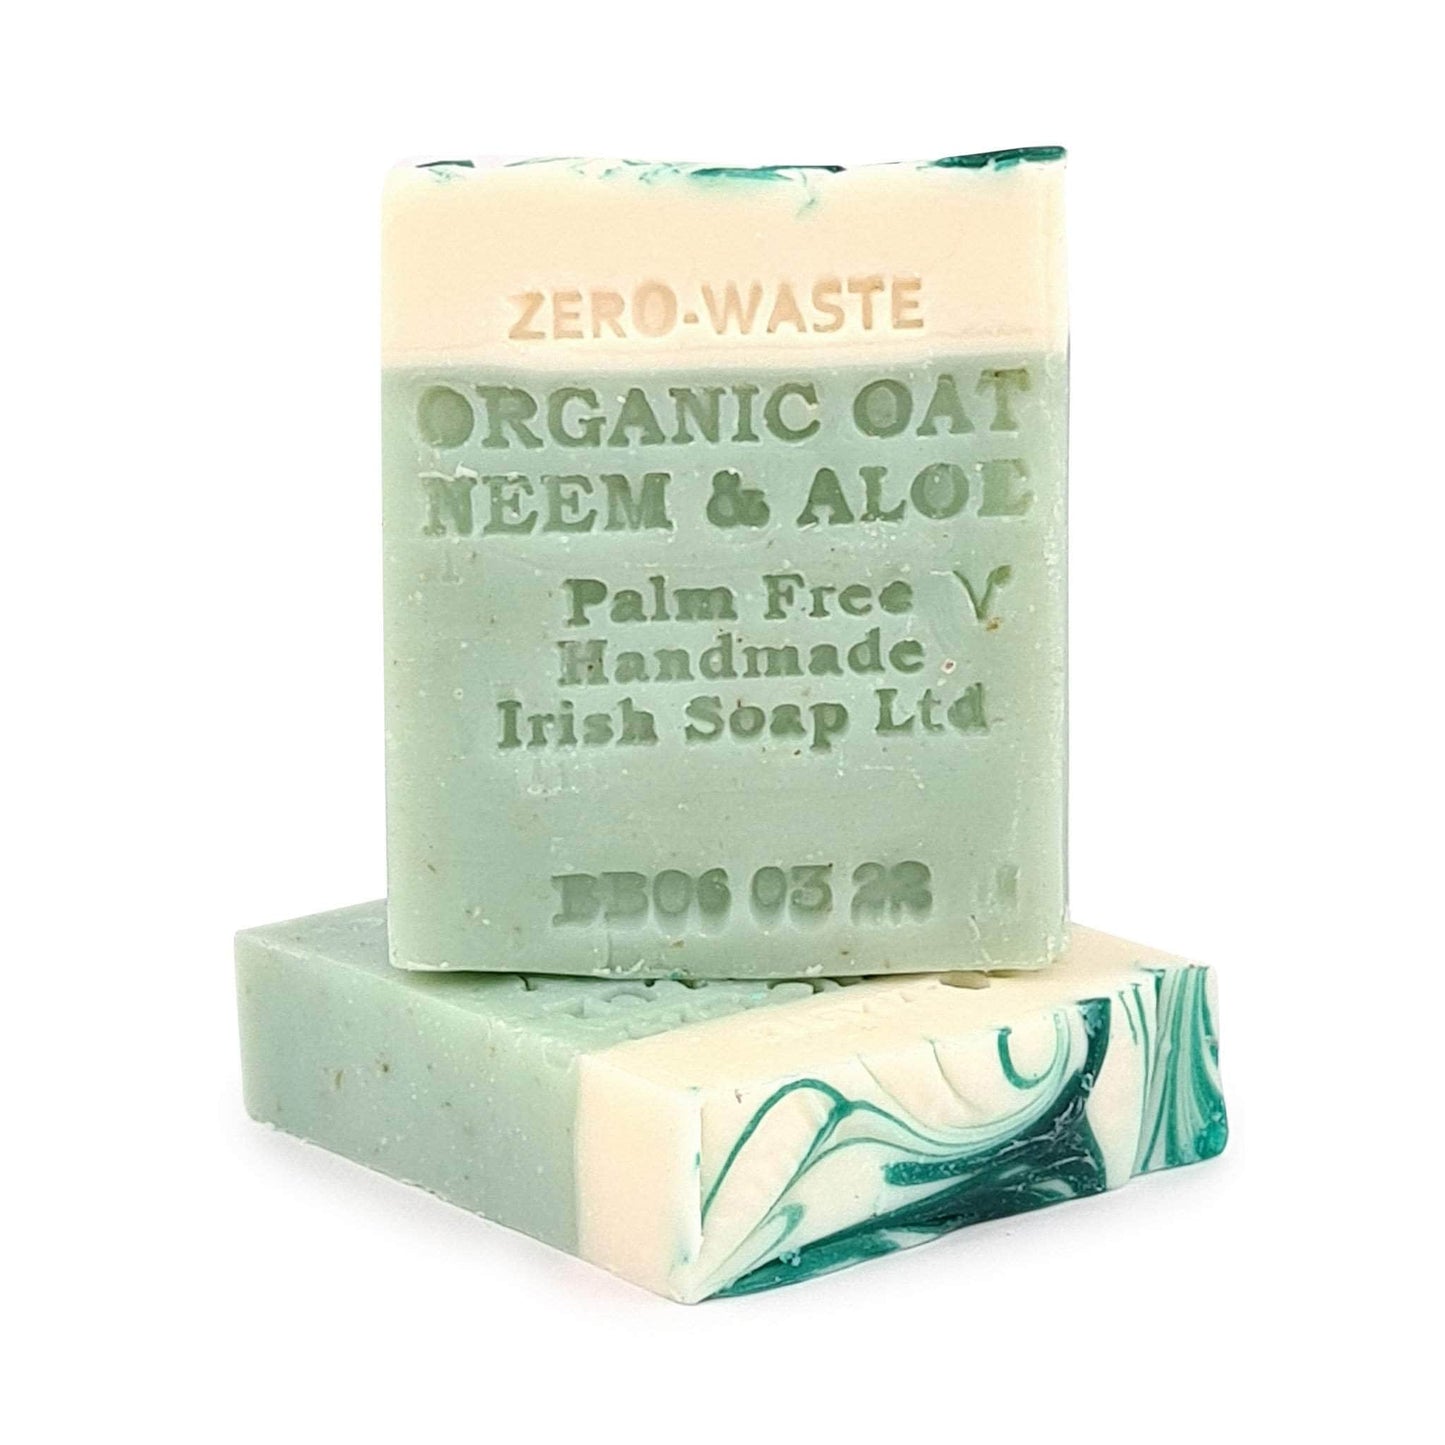 Palm Free Zero Waste Handmade Soap Bars - Organic Oatmeal, Neem & Aloe